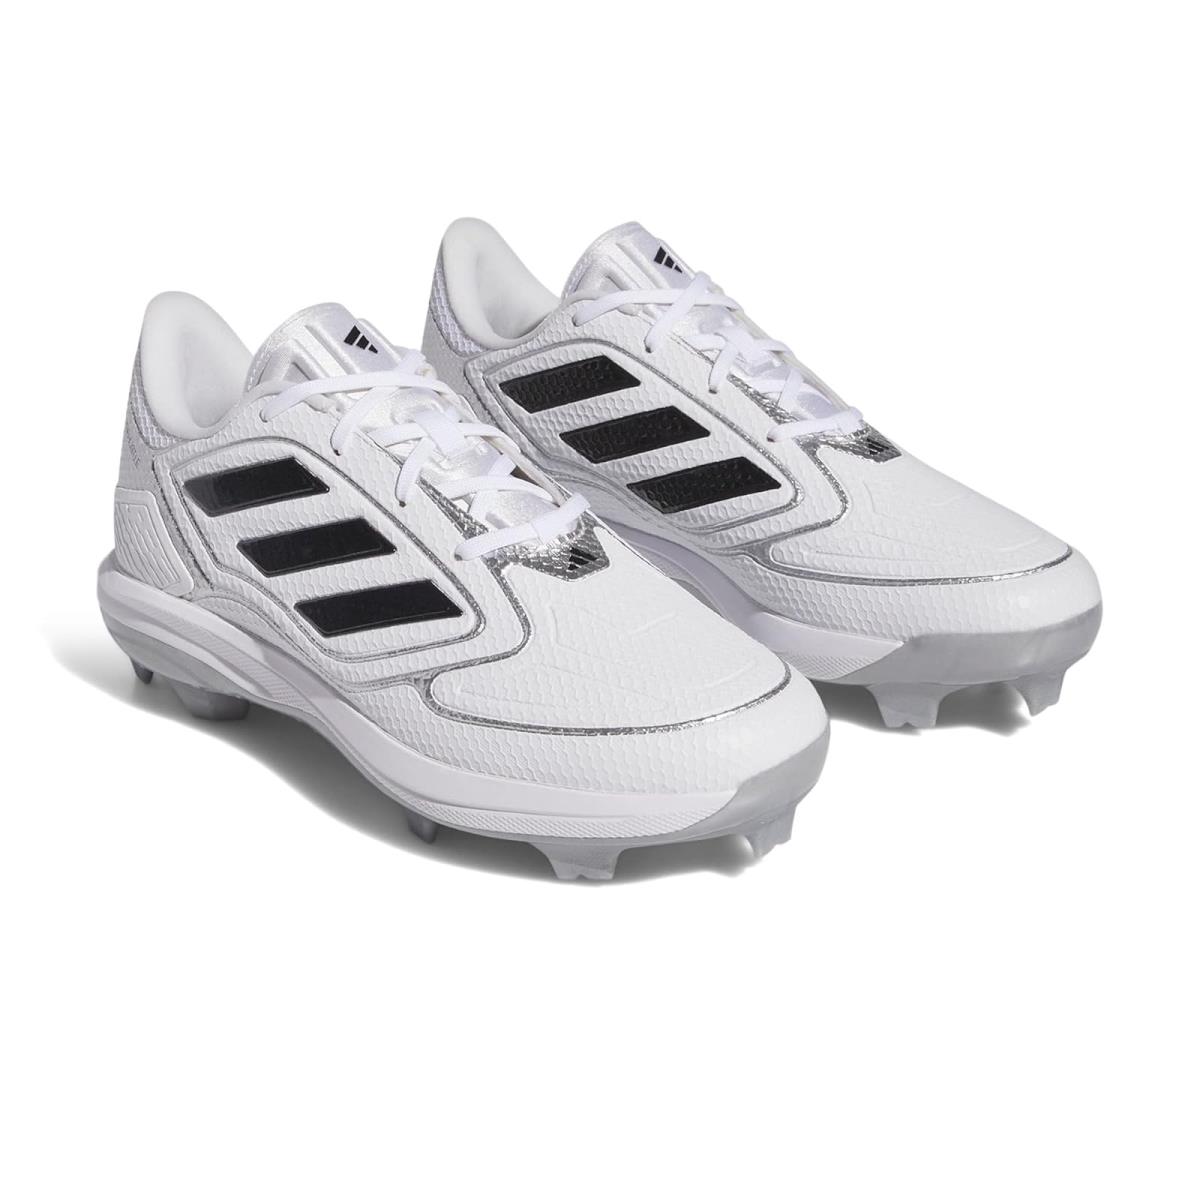 Woman`s Shoes Adidas Adizero Purehustle 3 Softball Cleats Footwear White/Core Black/Silver Metallic